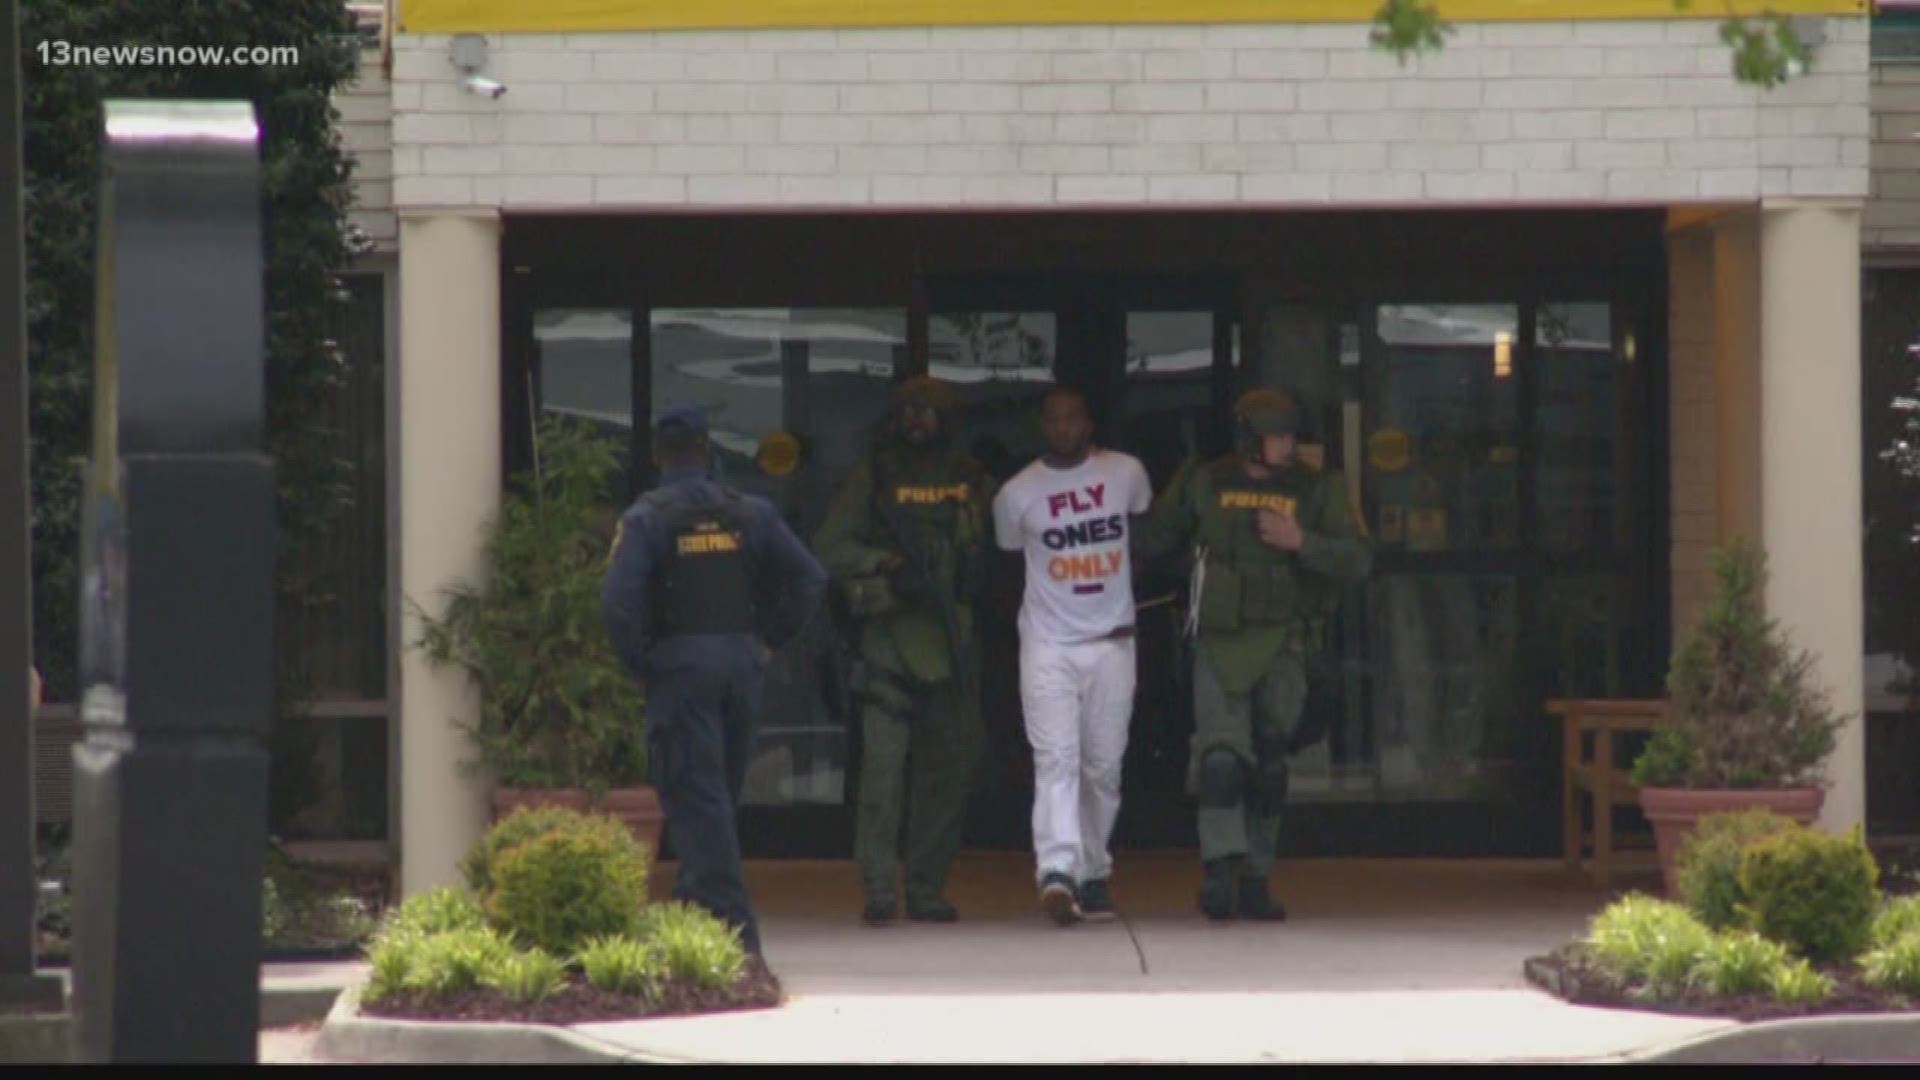 Newport News police apprehend fugitive at Days Inn, ending tactical situation